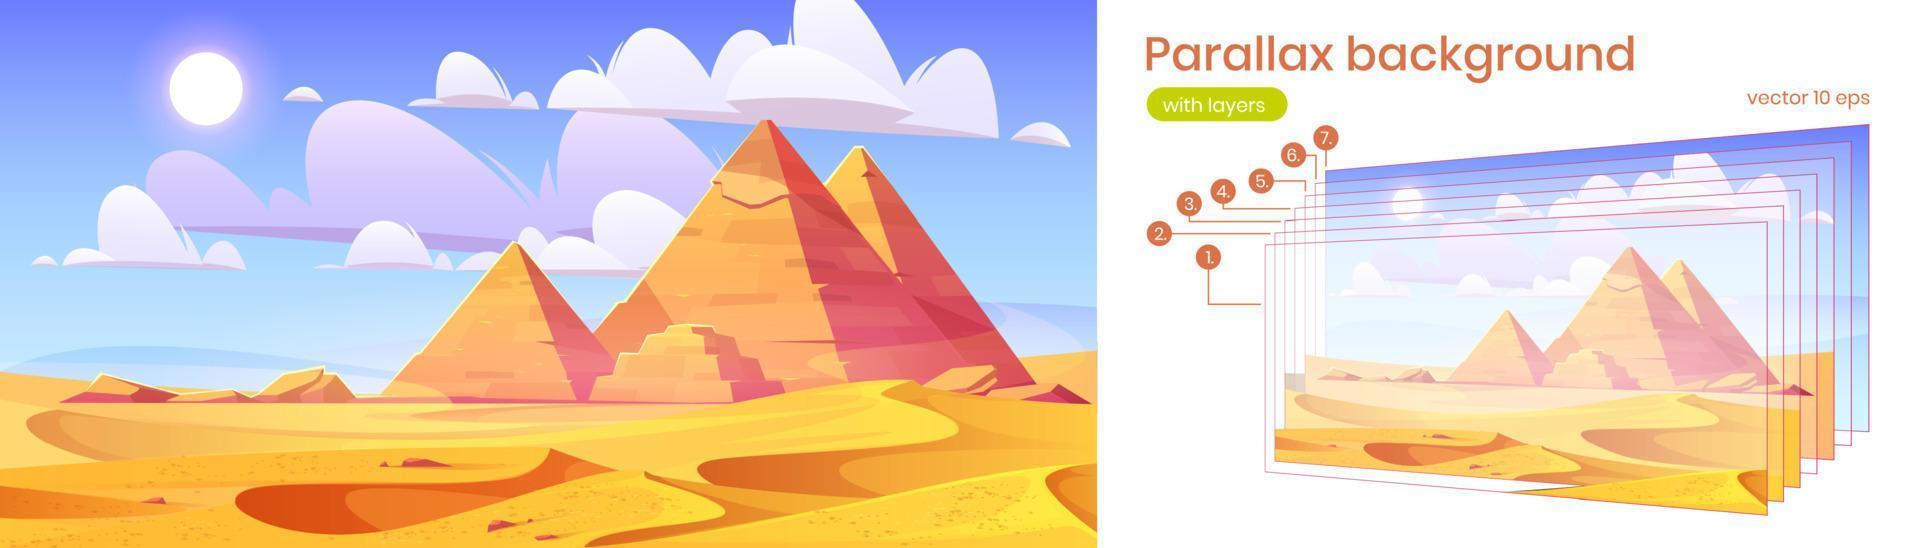 egipto pirámides paralaje fondo 2d paisaje vector